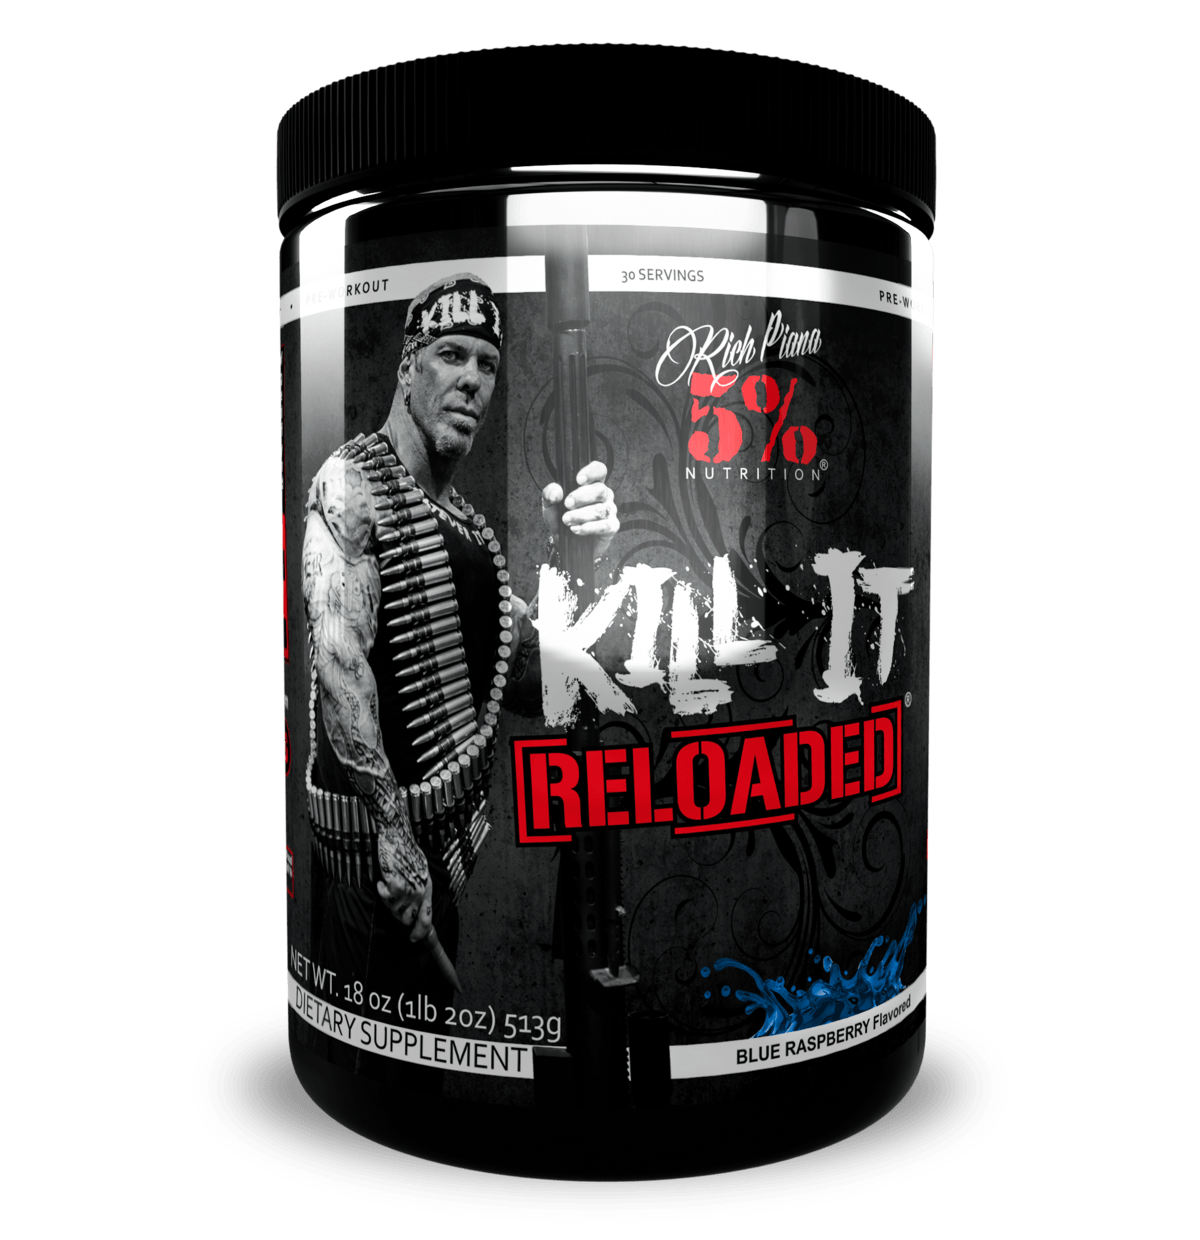 Kill It Reloaded, 513 g, Rich Piana 5%. Pre Entreno. Energy & Endurance 